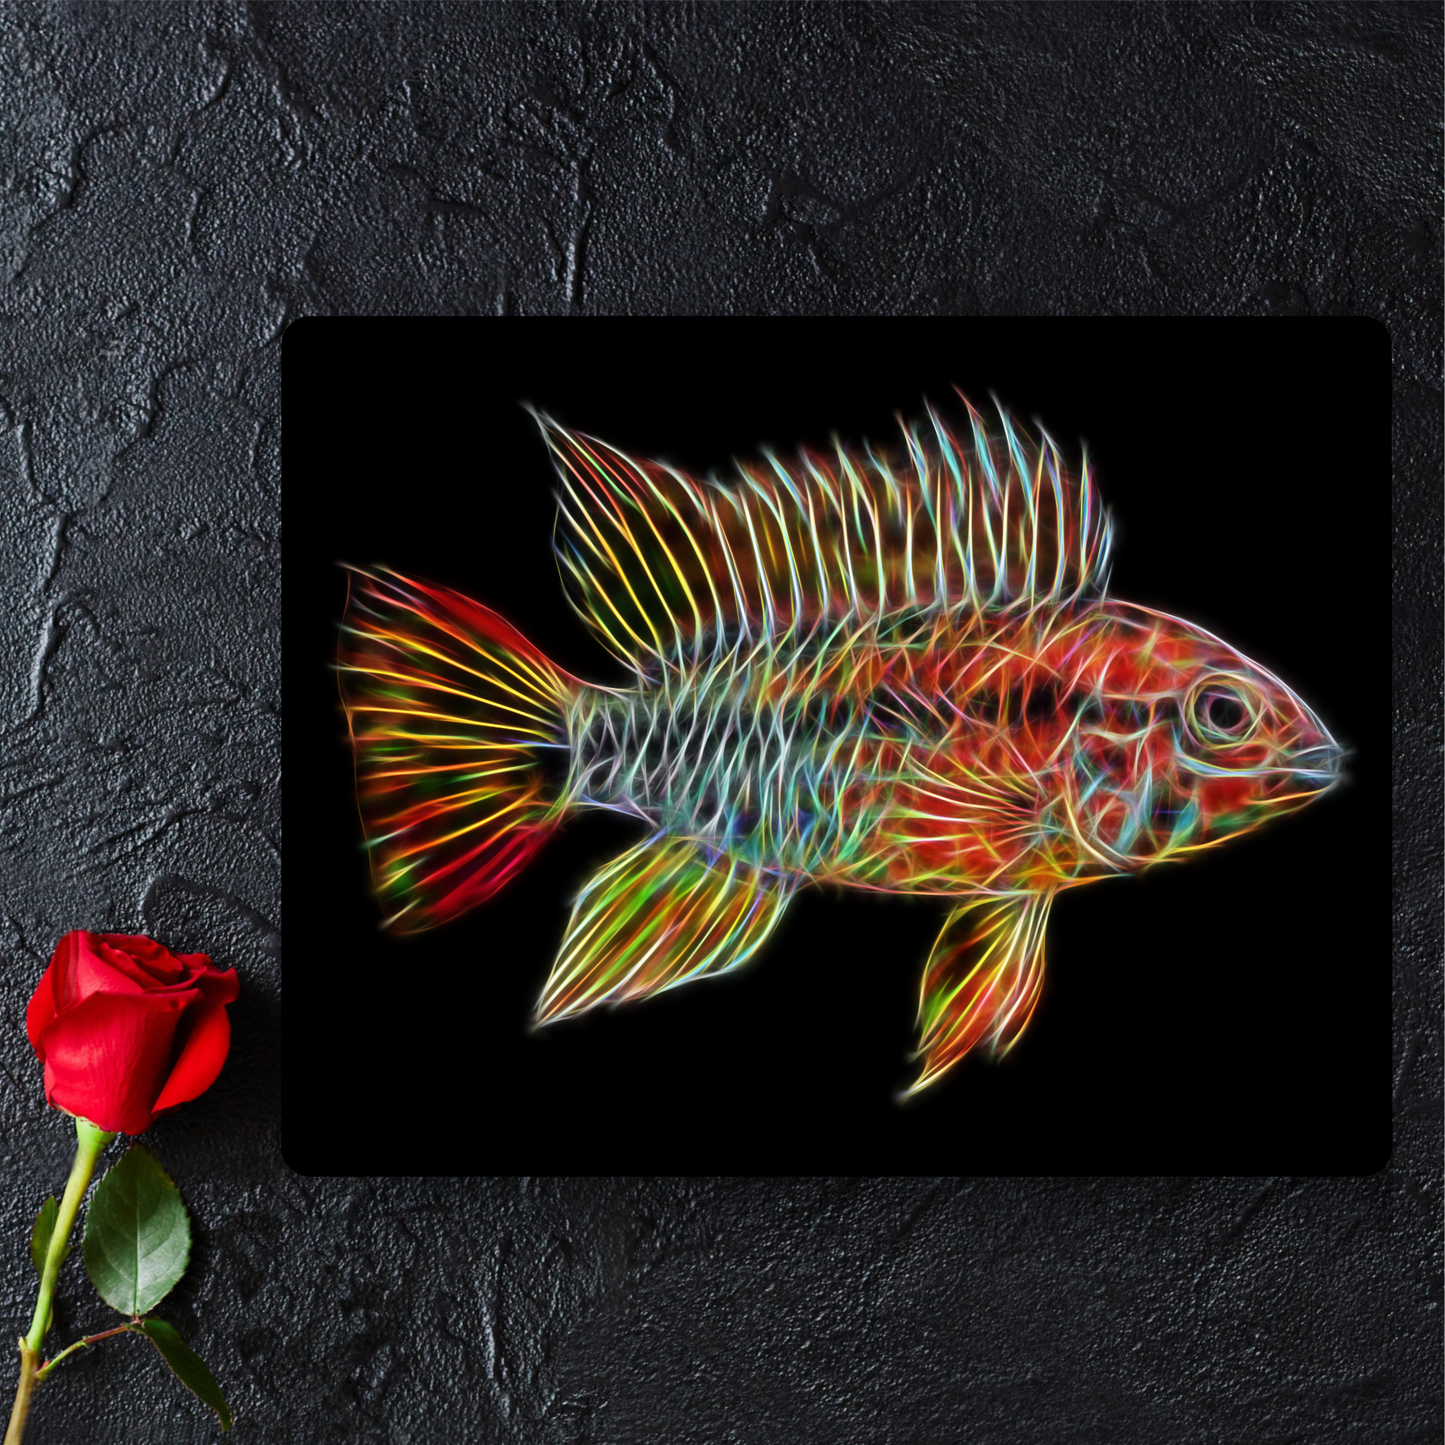 Red Neck Apistogramma Cichlid Fish Metal Wall Plaque.